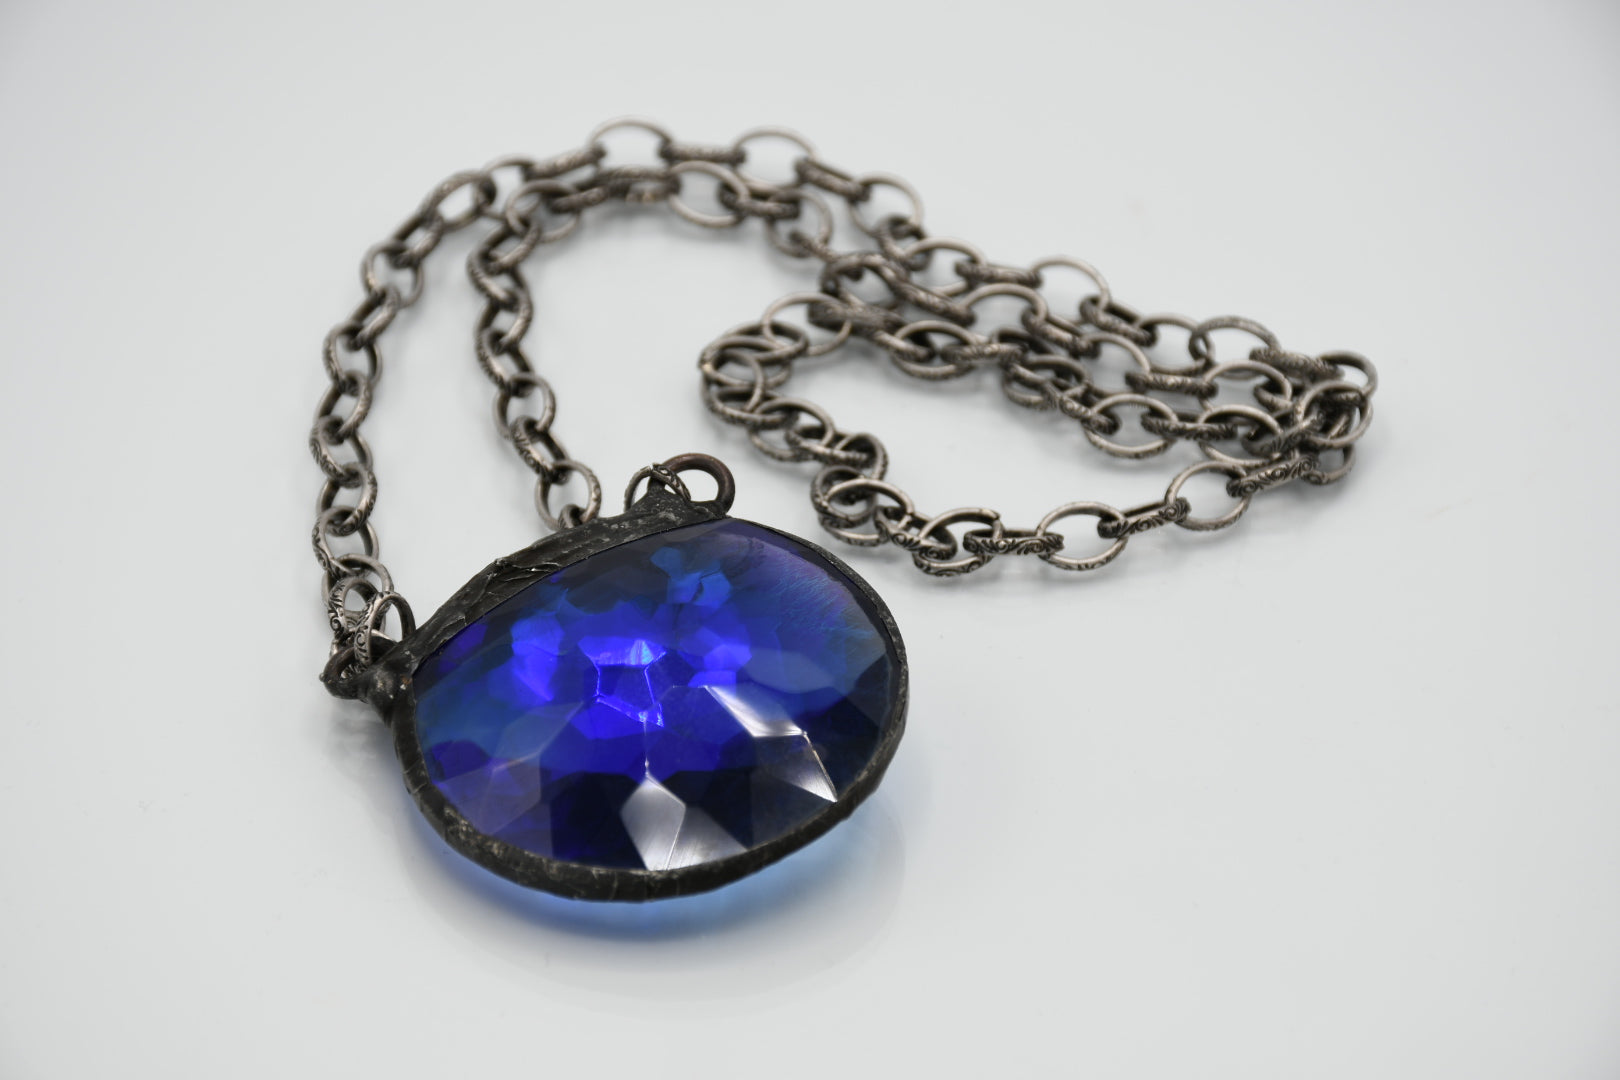 Royal Blue crystal necklace